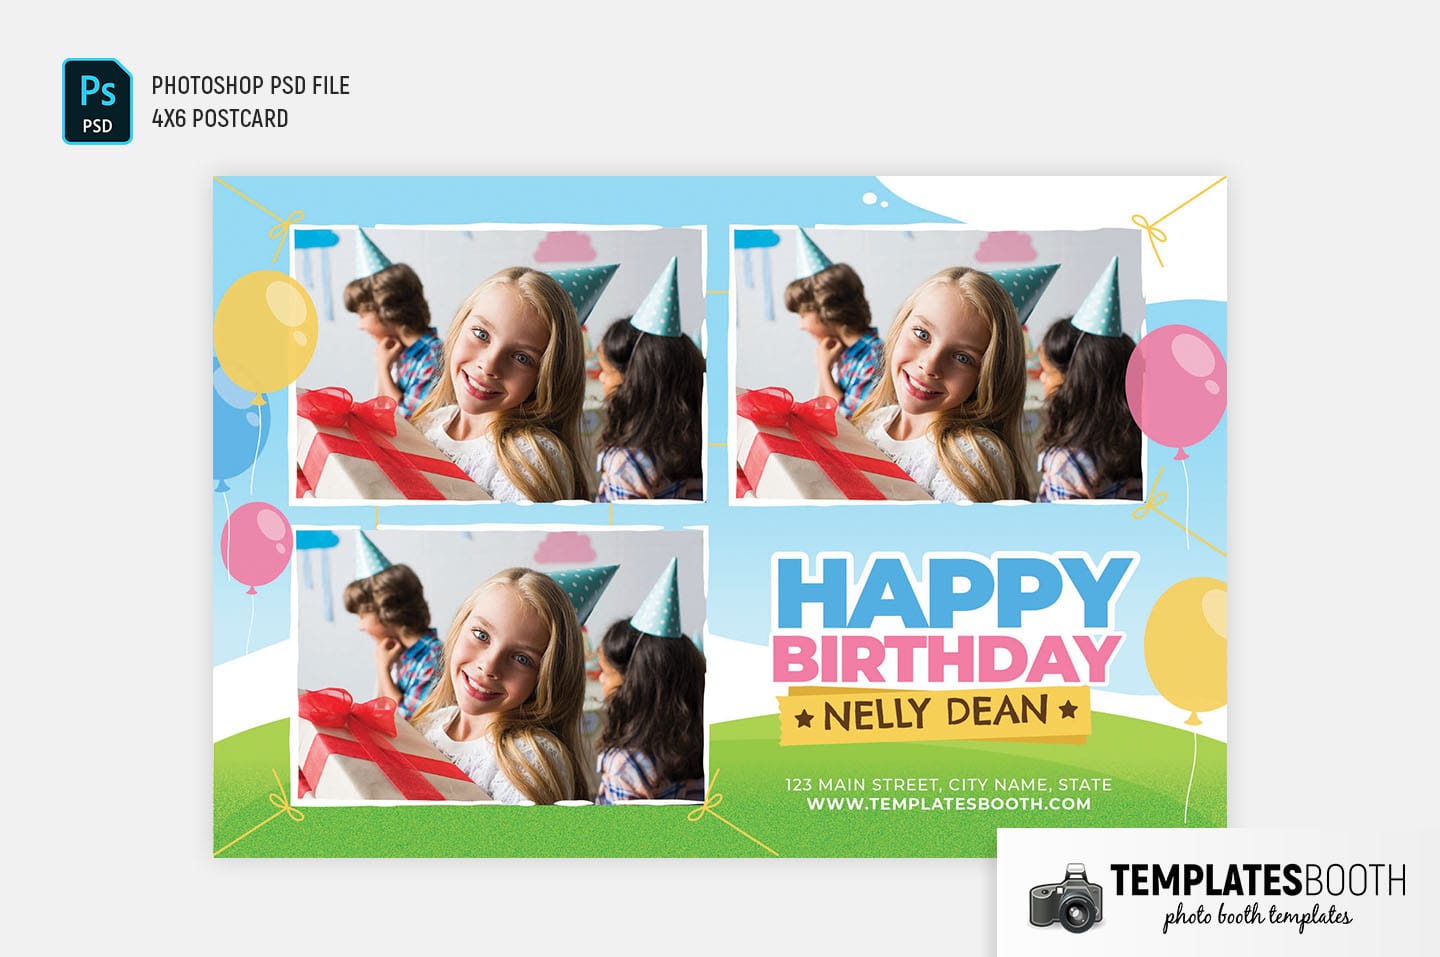 Happy Birthday Photo Booth Template (4x6 Postcard)